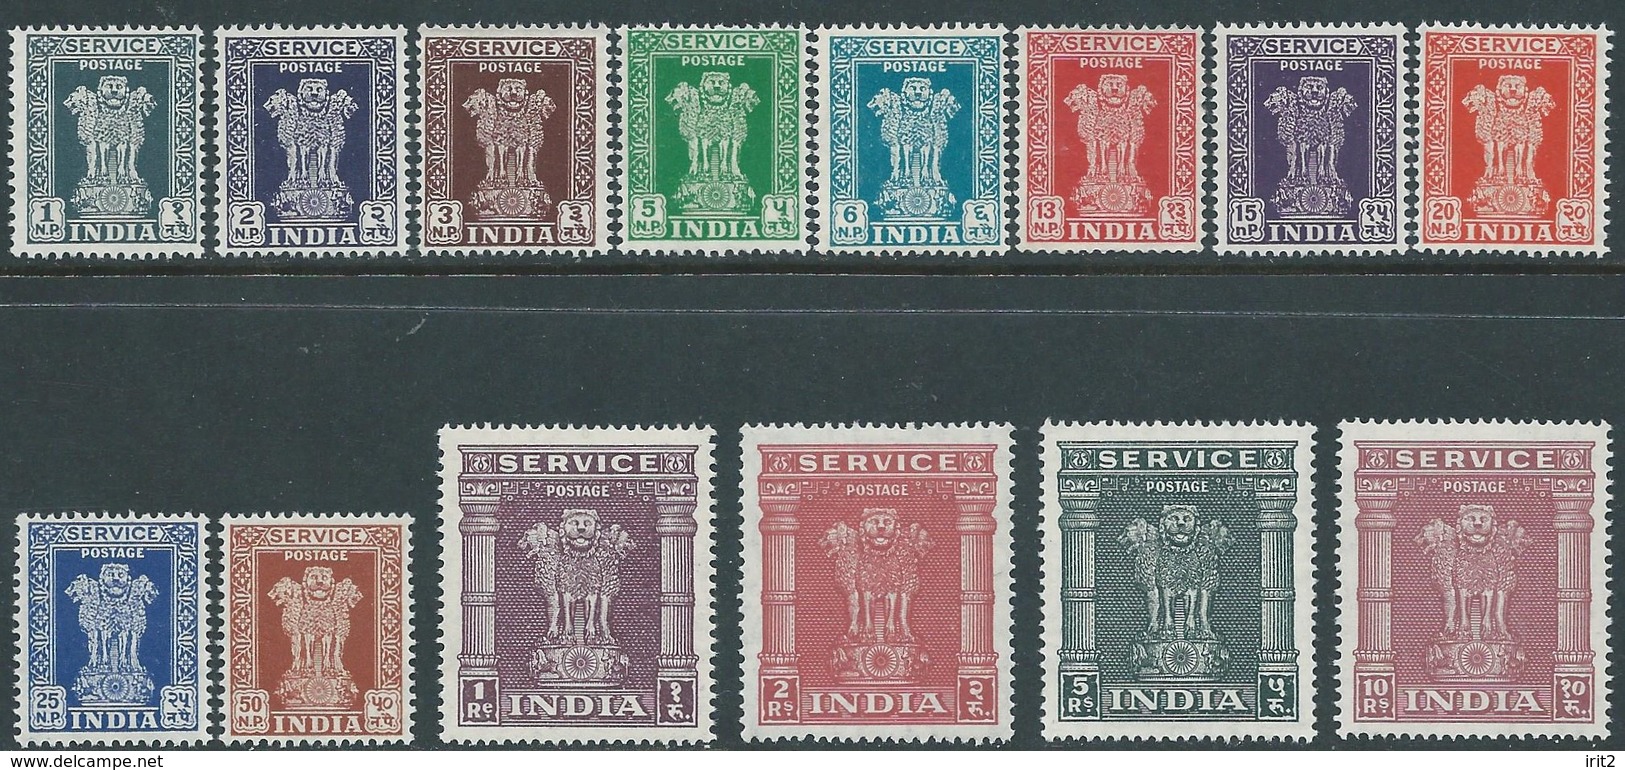 Stamps INDIA Repubblica 1950 - BEAUTIFUL COMPLETE SERIES - Unused Stamps